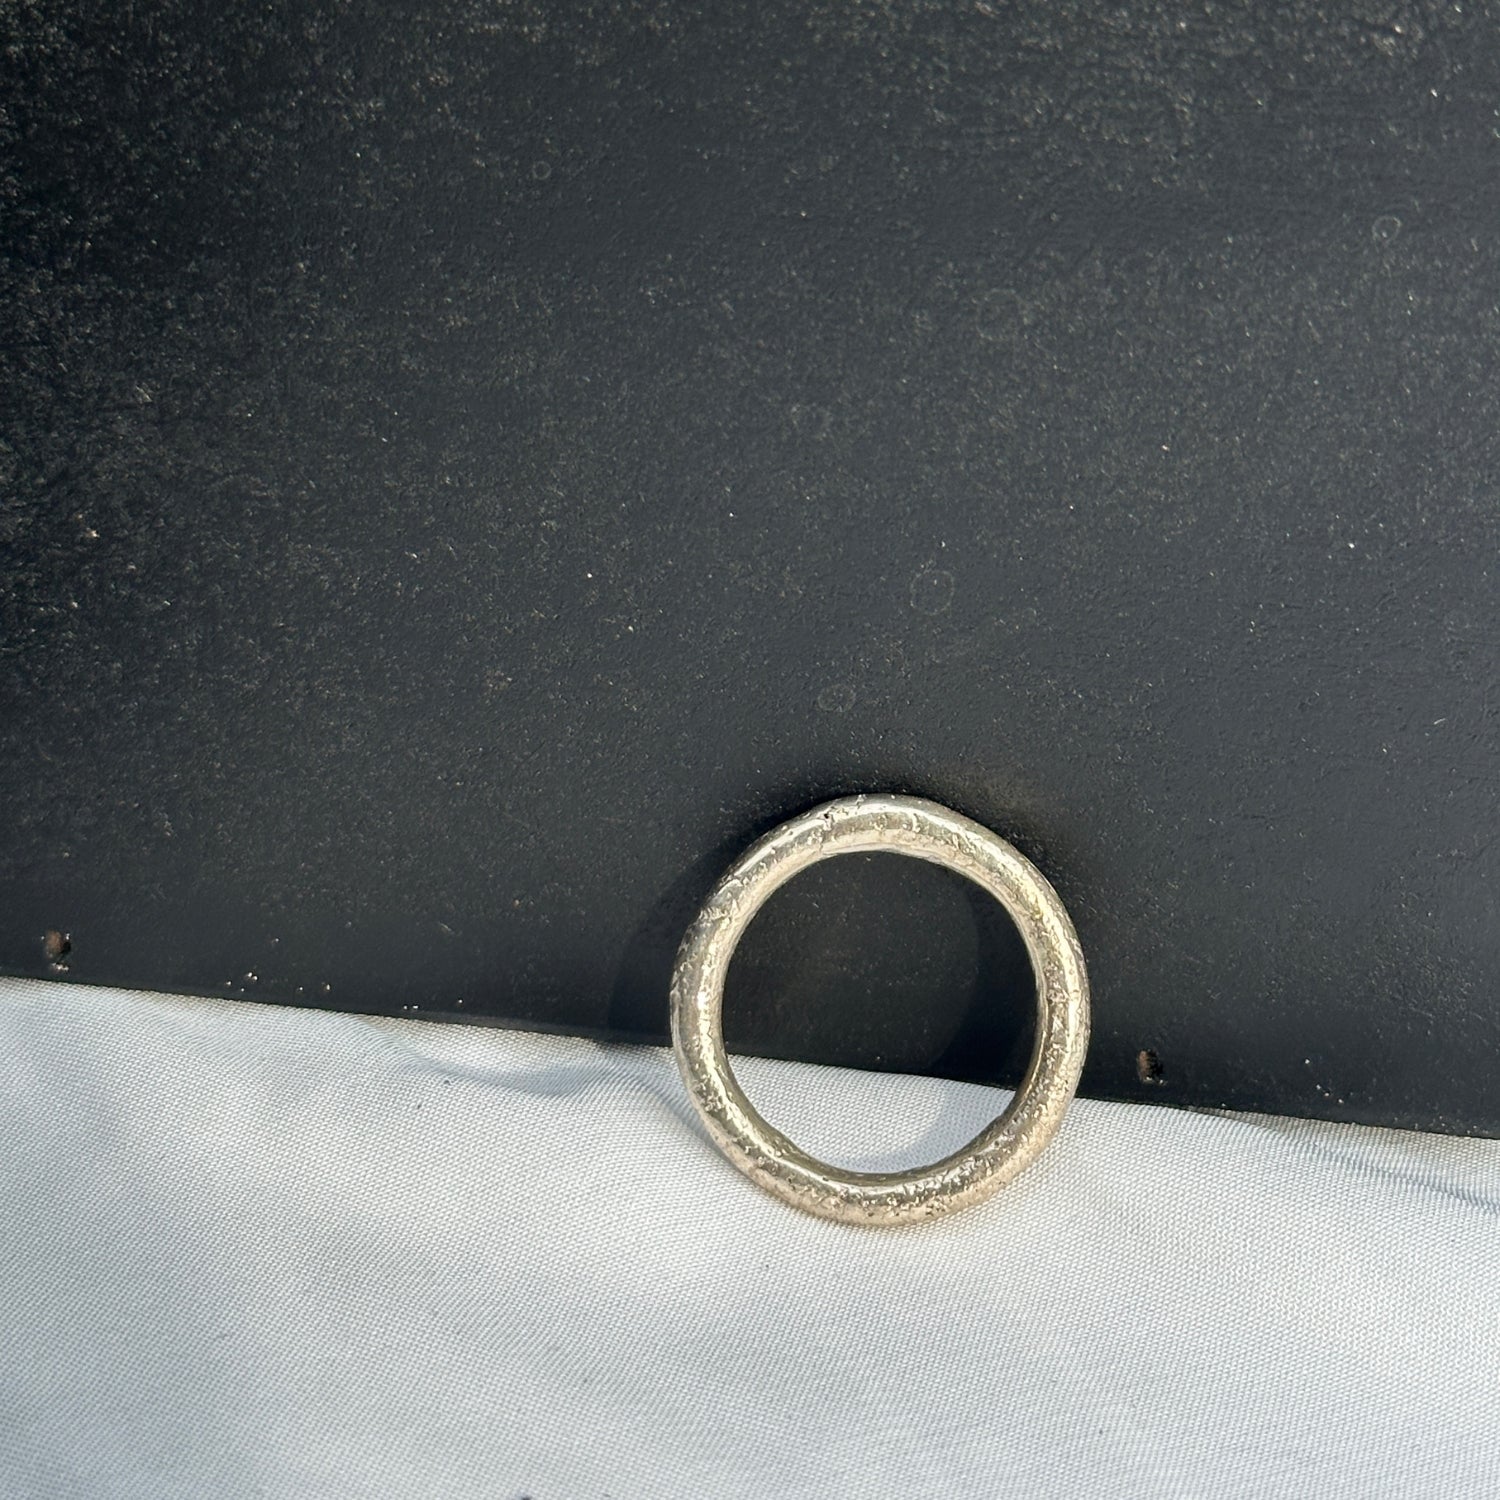 Reggs Silver 925 Men's Ring